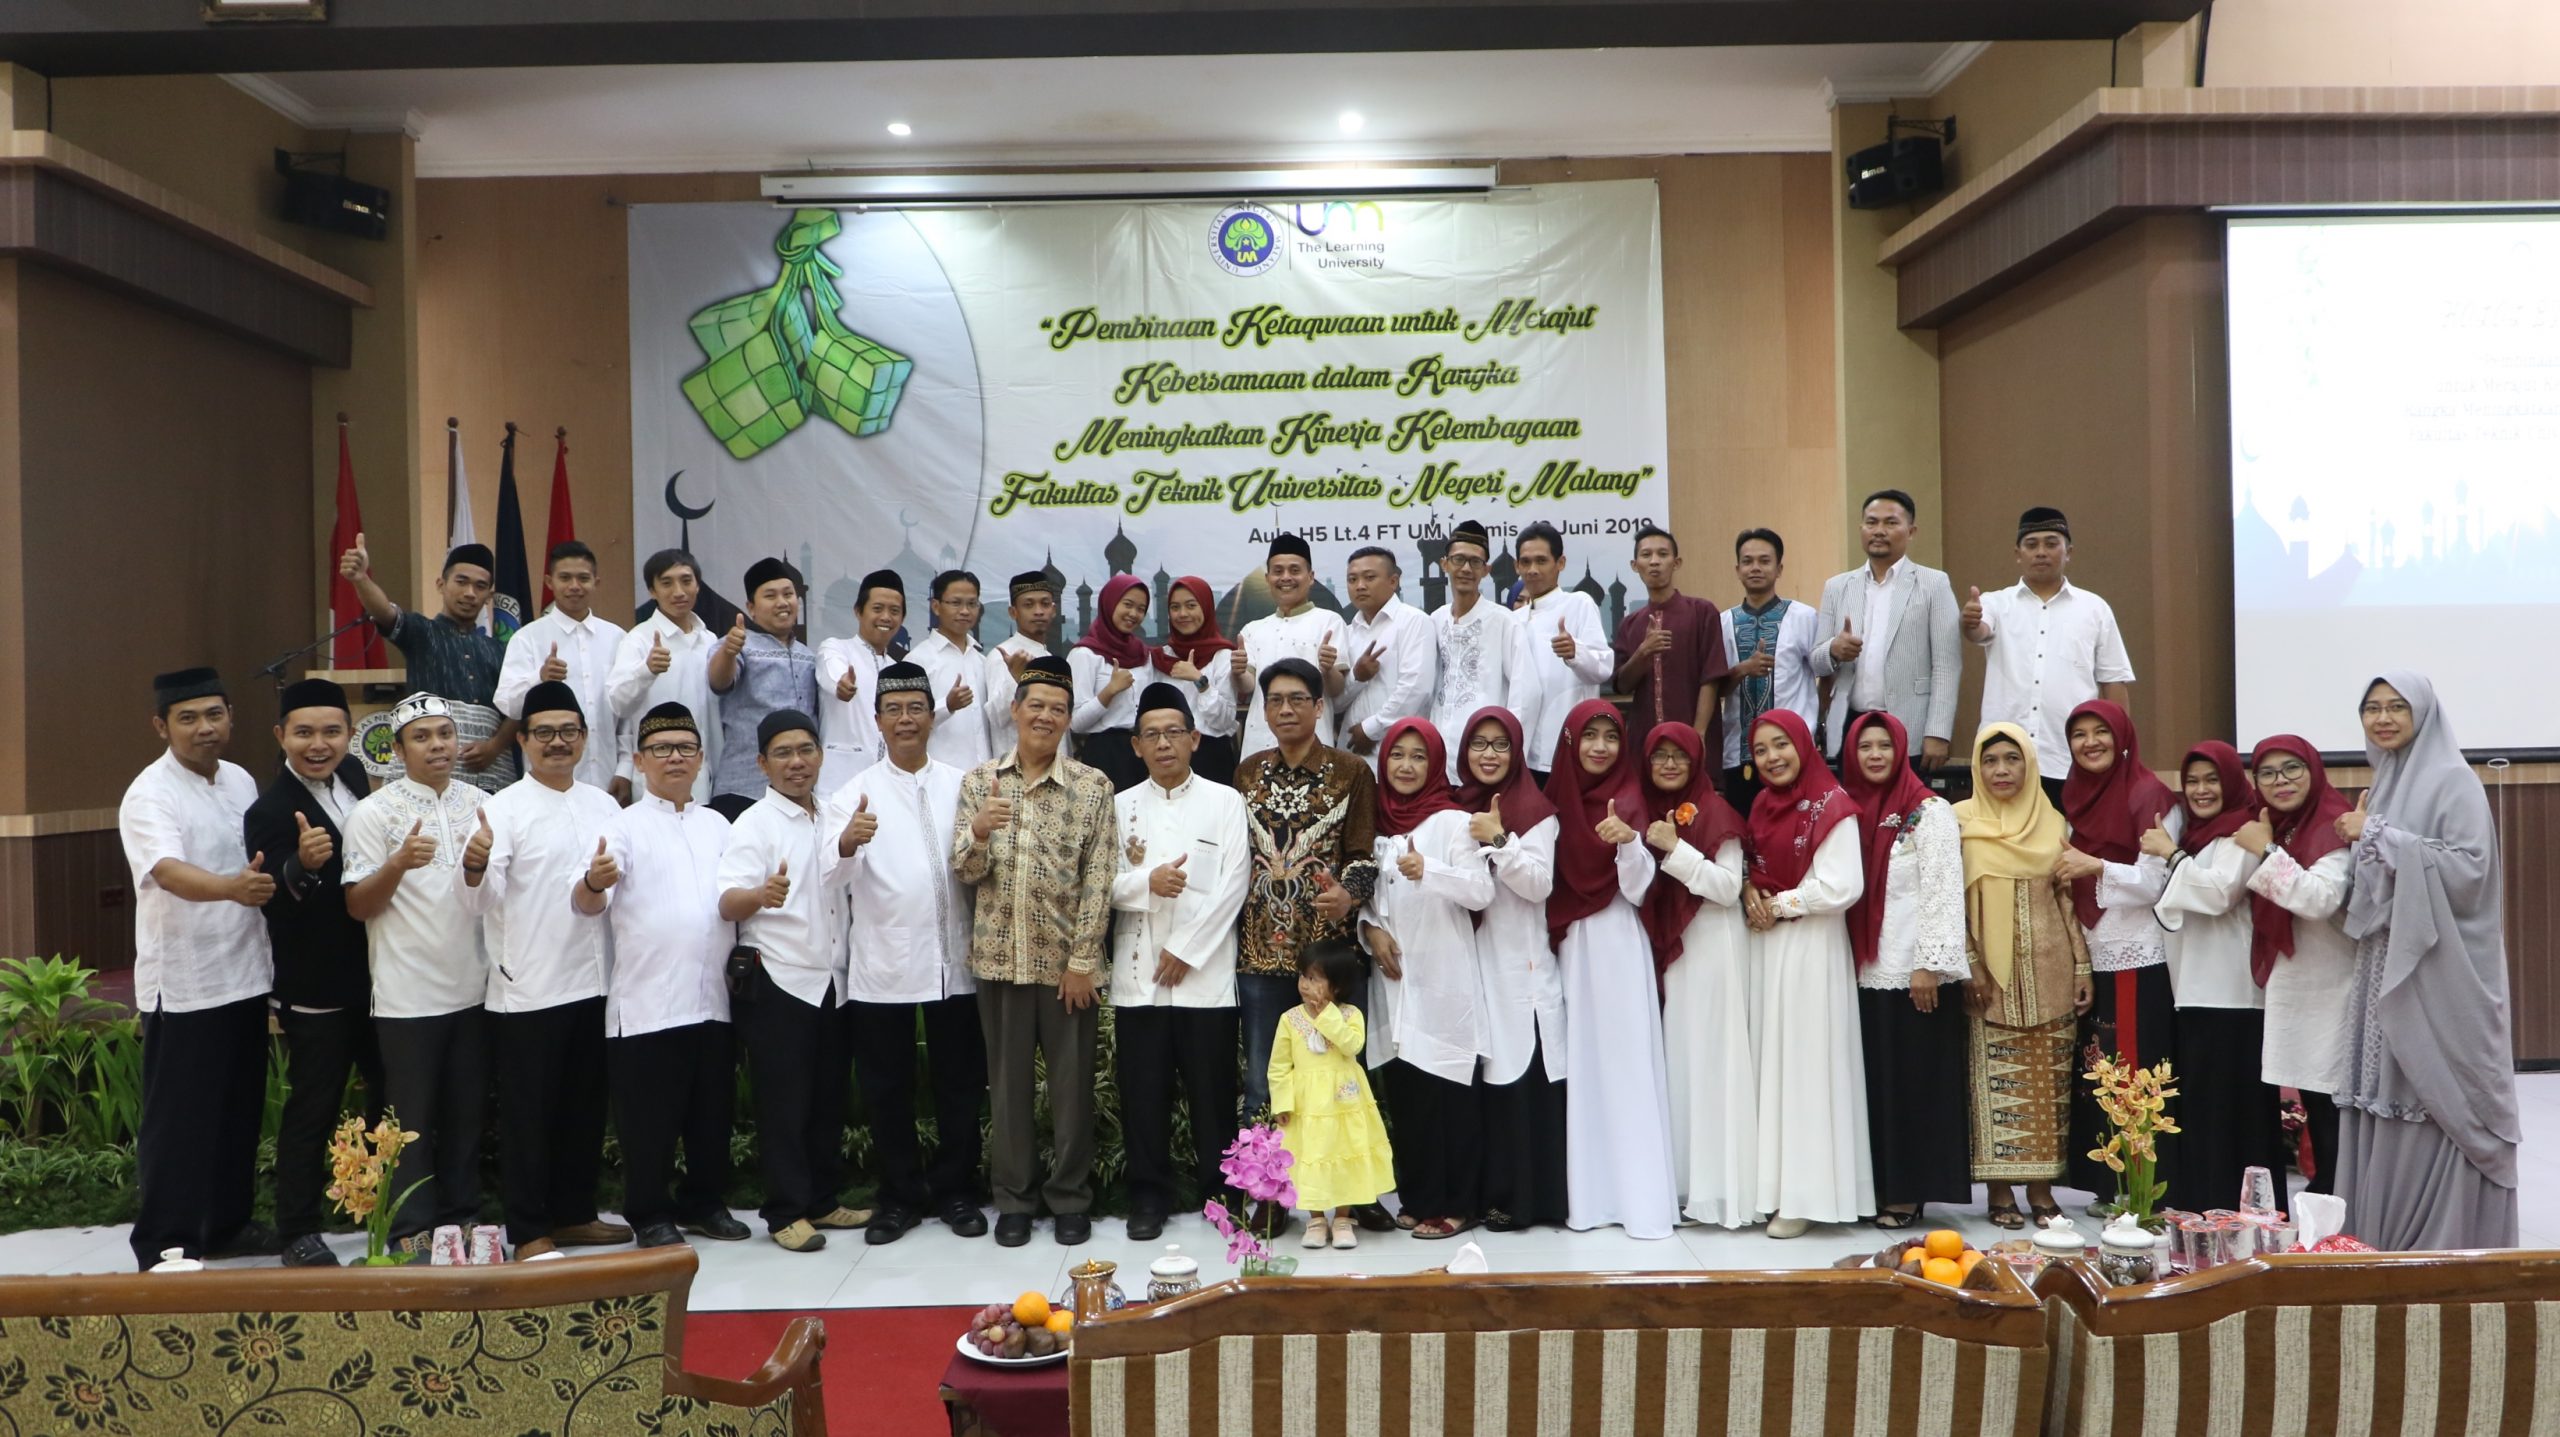 Halal BiHalal Dosen, Tendik, Serta Keluarga Besar Fakultas Teknik UM 2019